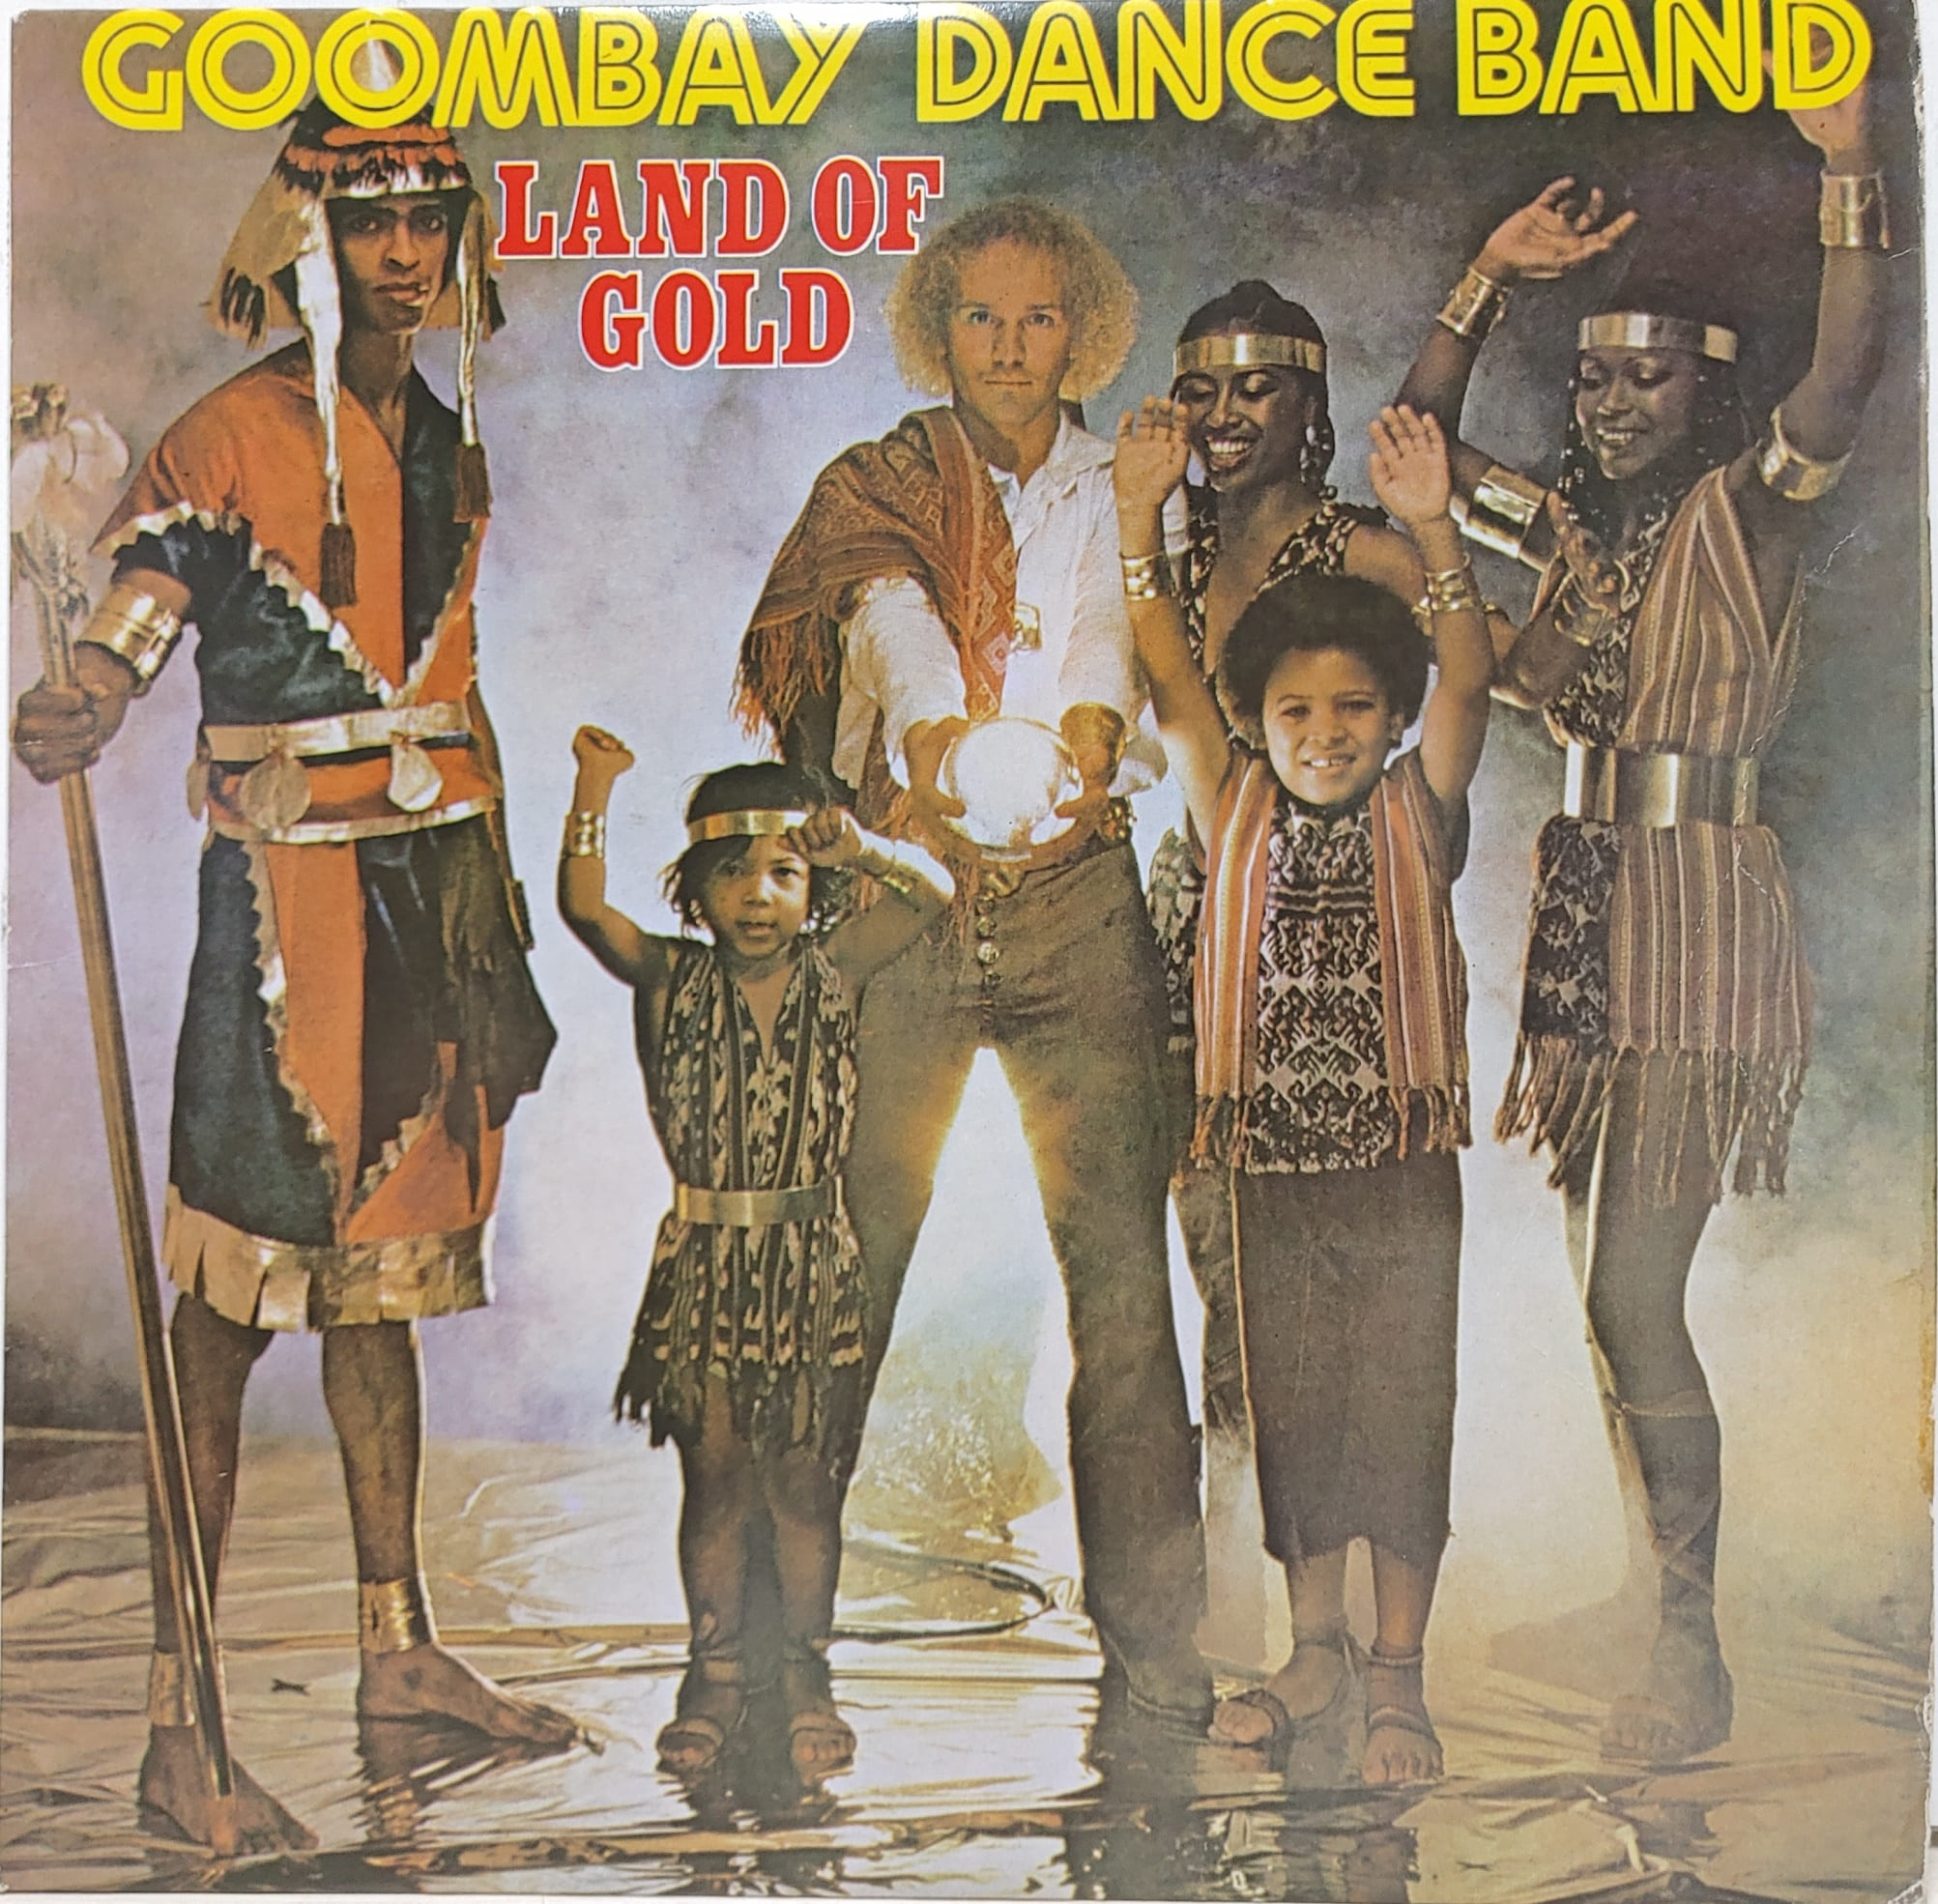 GOOMBAY DANCE BAND